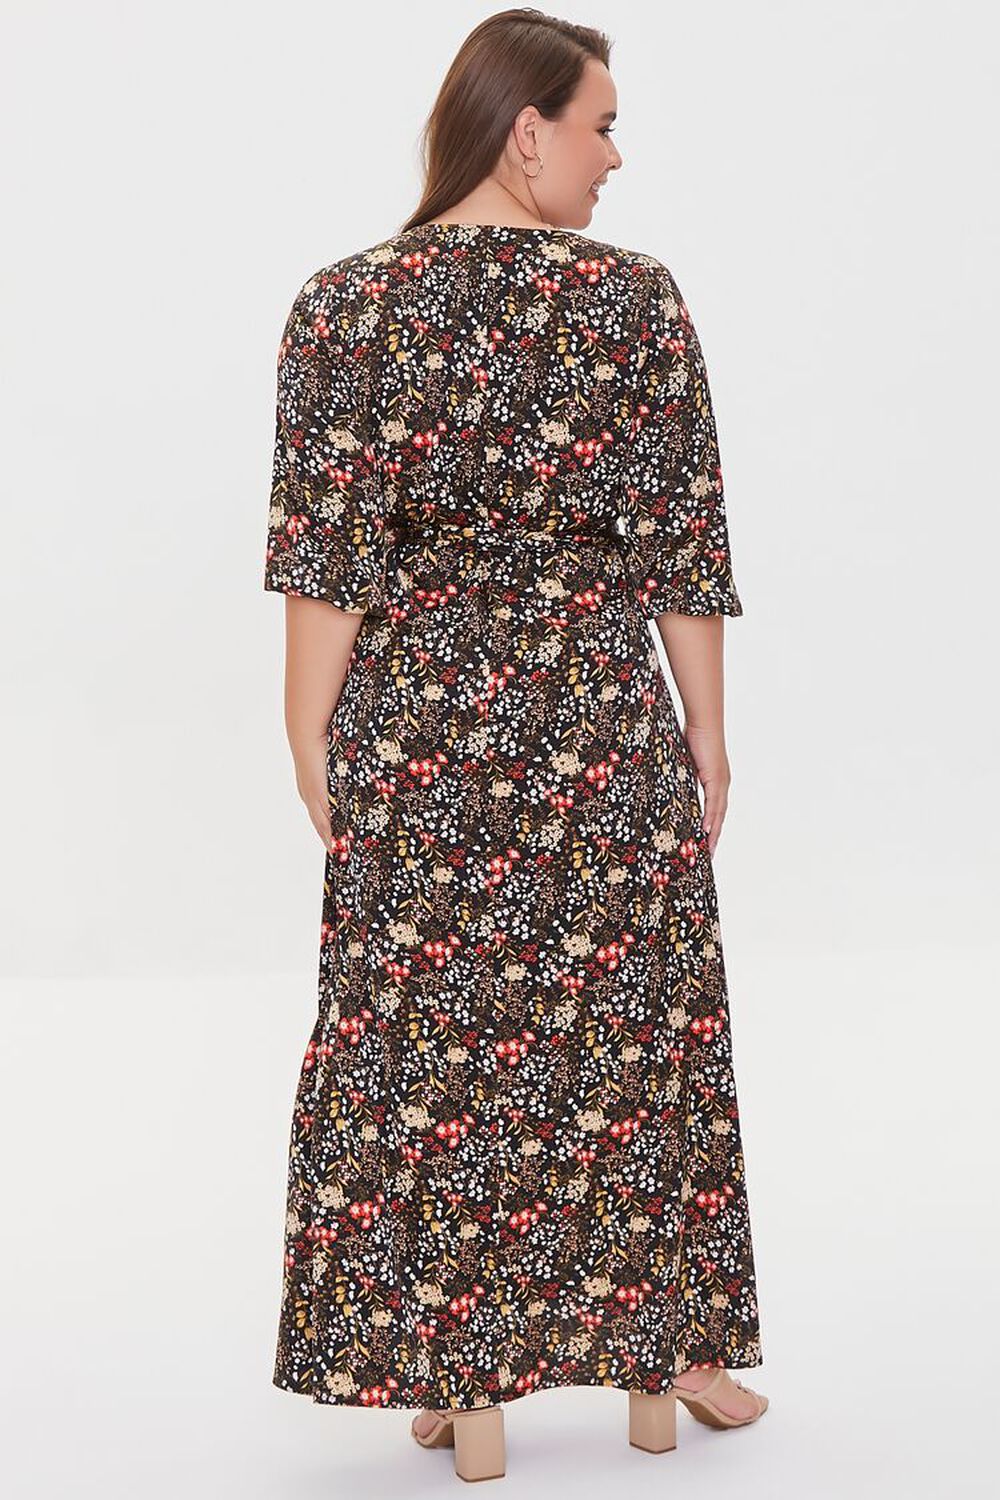 BLACK/MULTI Plus Size Floral Print Maxi Dress, image 3